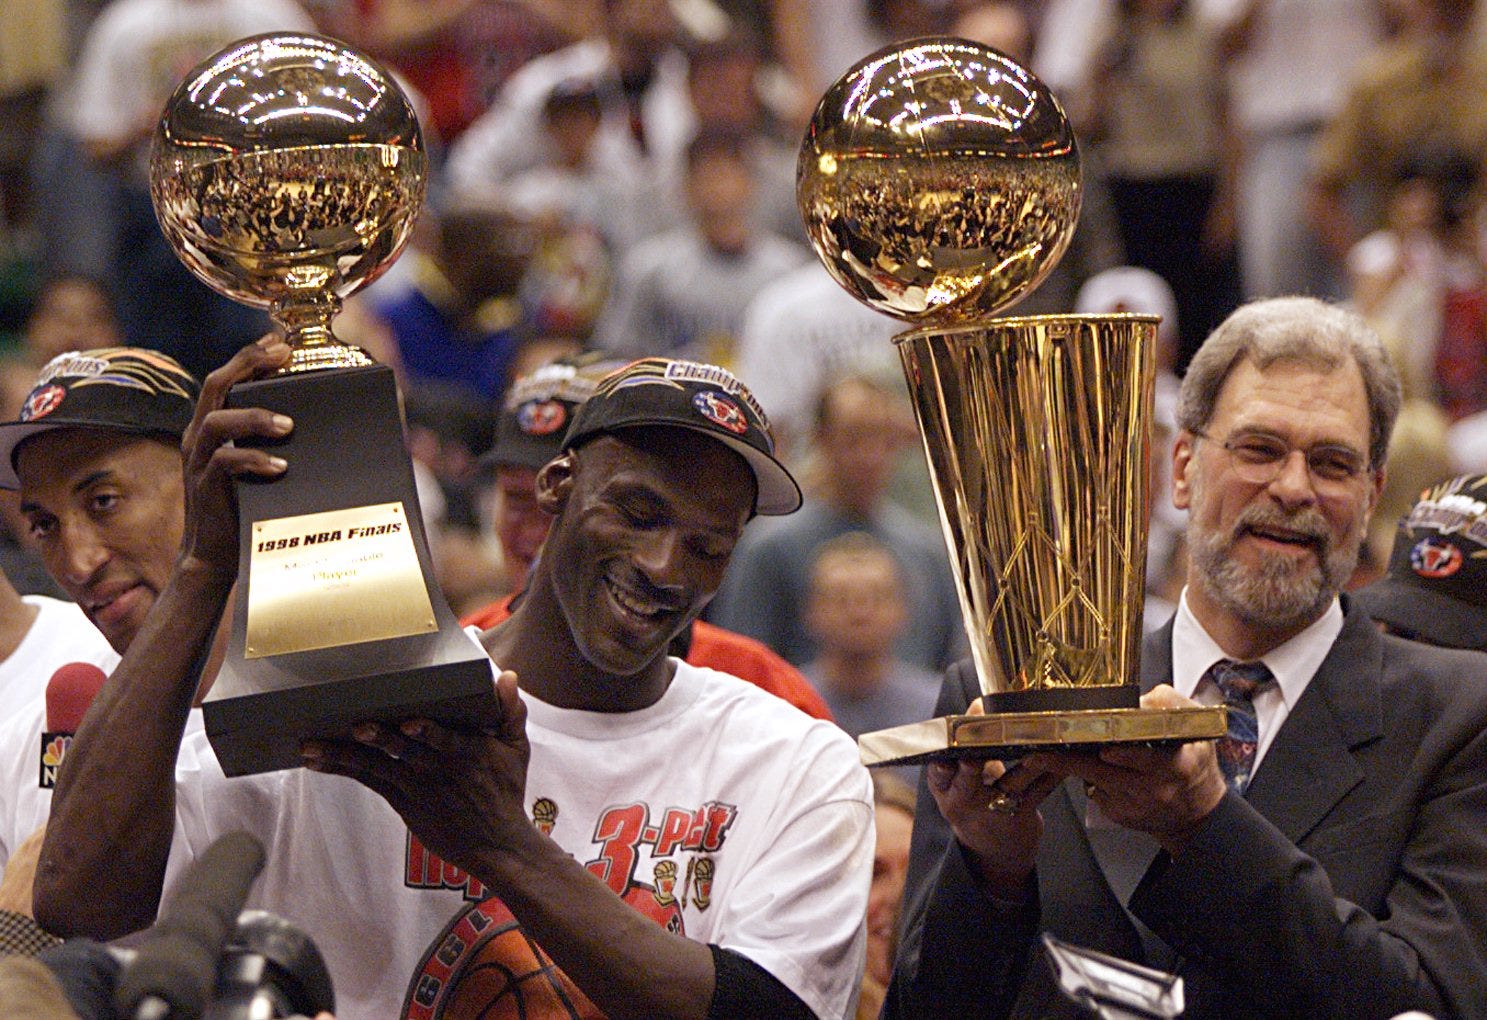 Michael Jordan's six championship Bulls teams, ranked